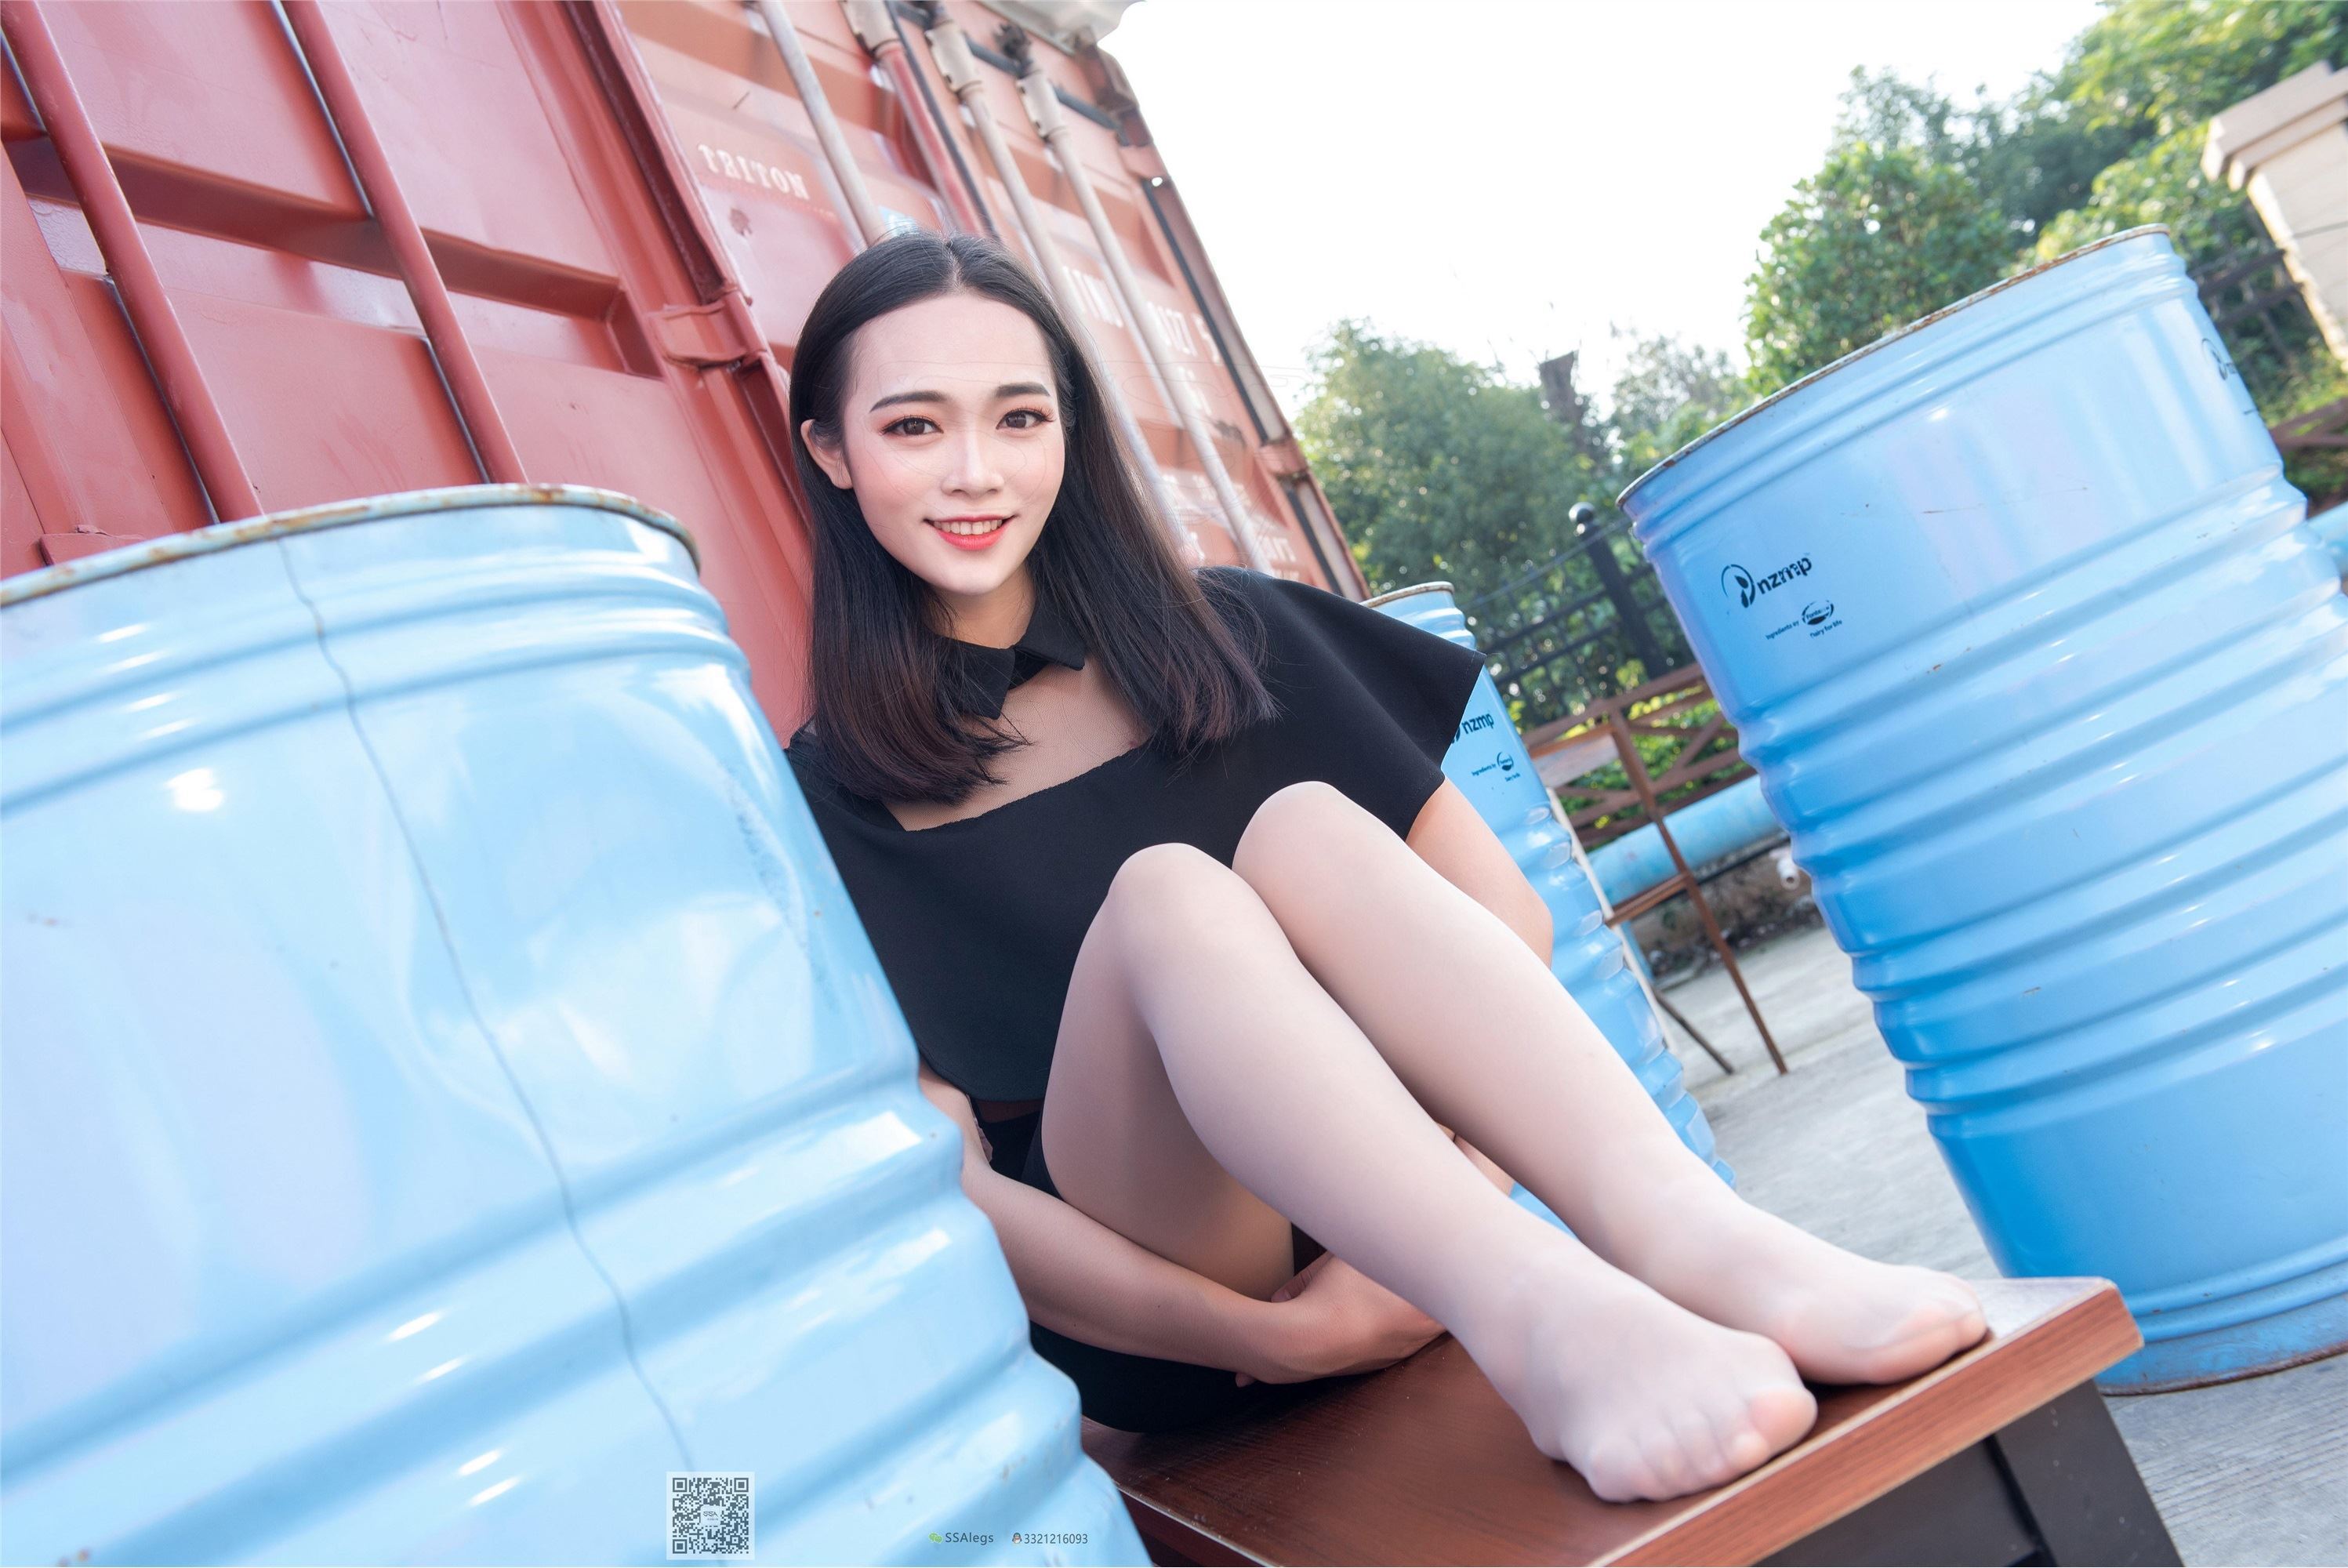 SSA silk club No.042 cure is smiling Gao sister Xiao Feng art street shot